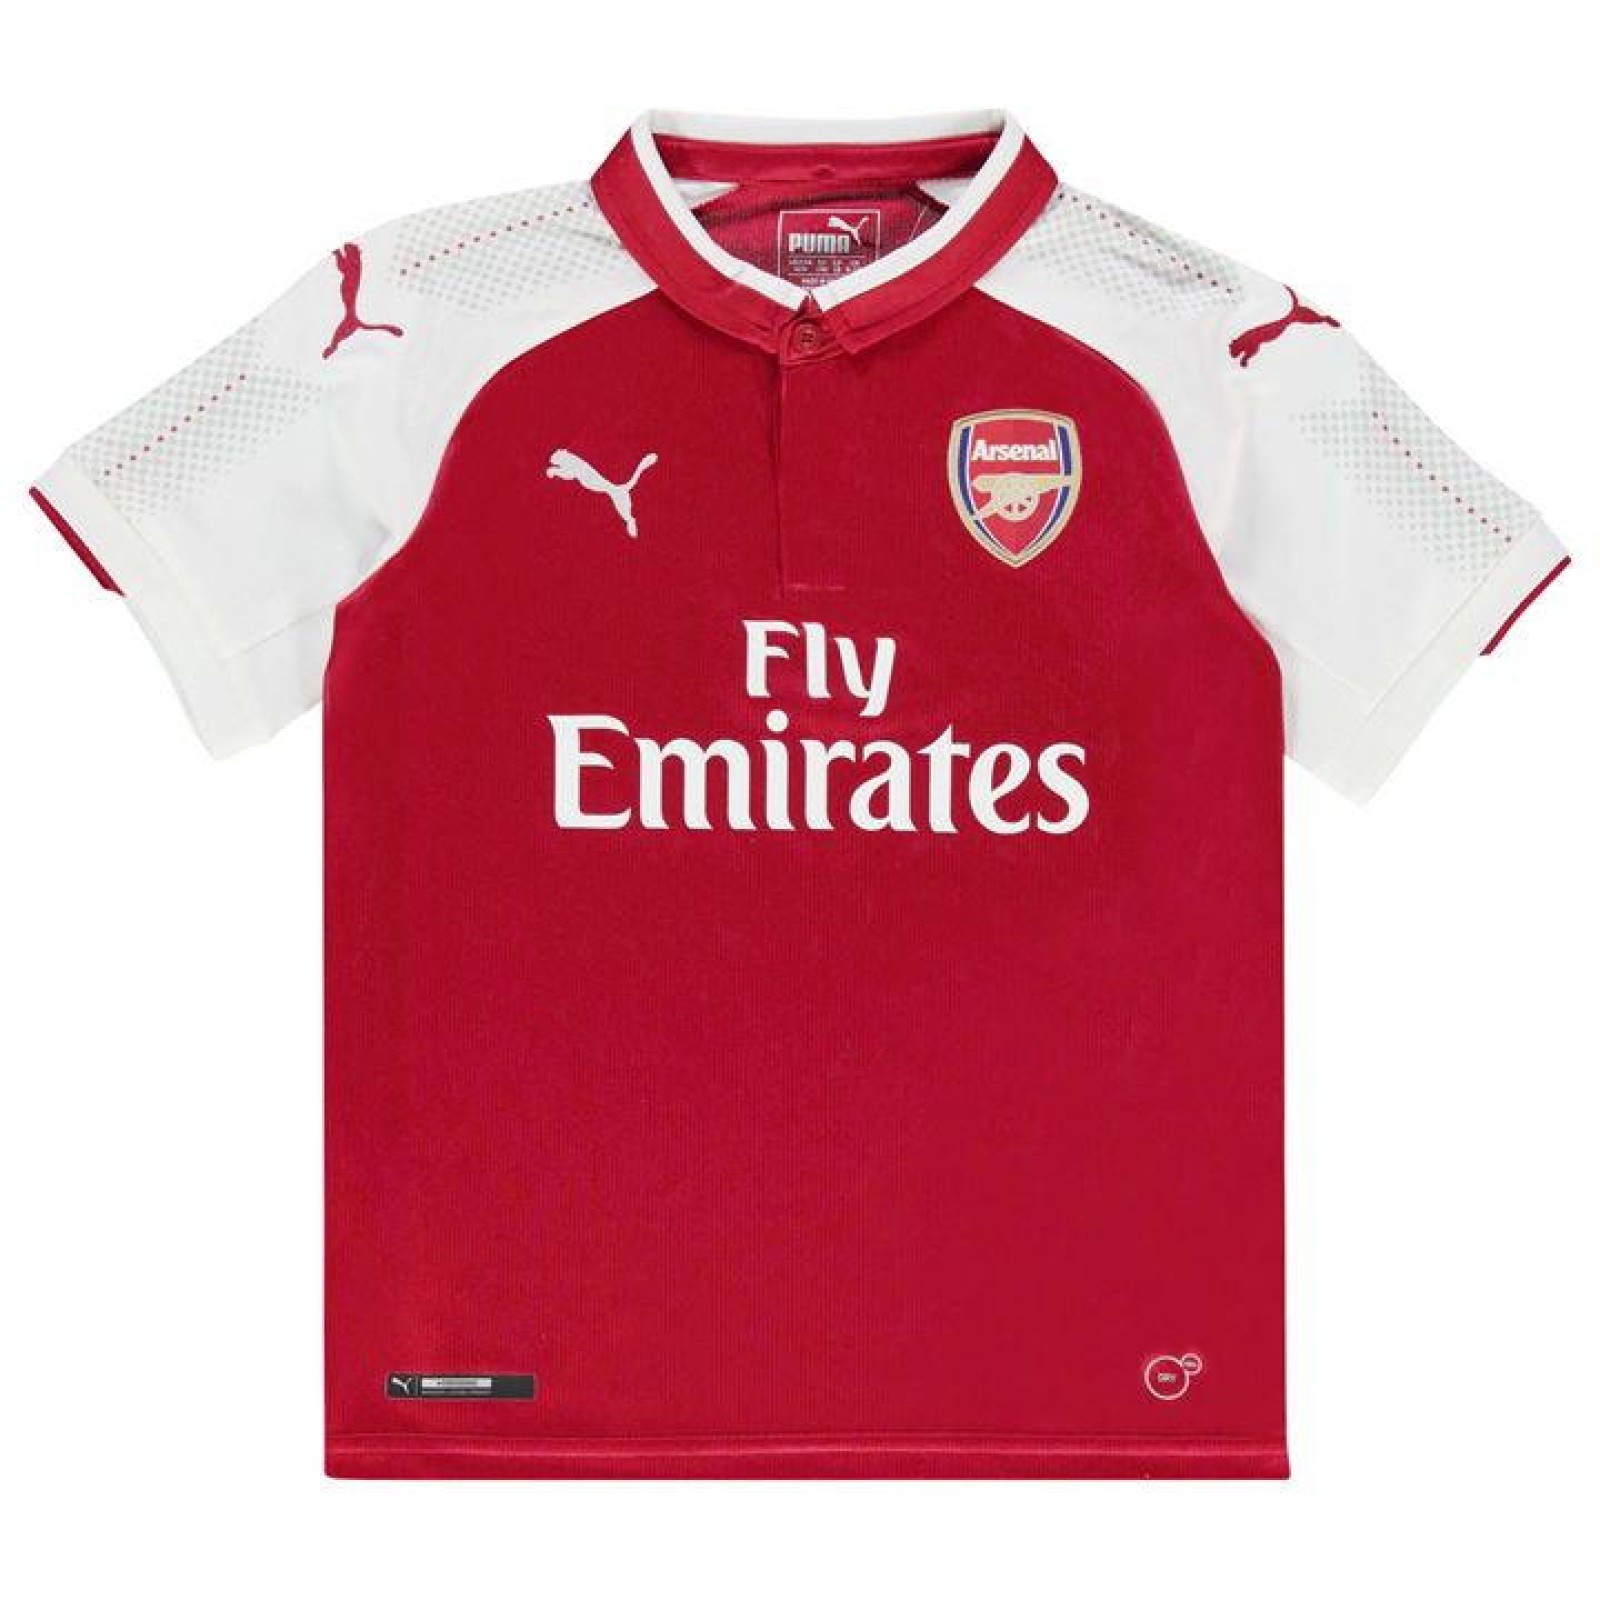 Футболка арсенал купить. Футболка Арсенал Лондон. Fly Emirates футболка Пума. Майки Арсенала. Футболка футбольная Arsenal.